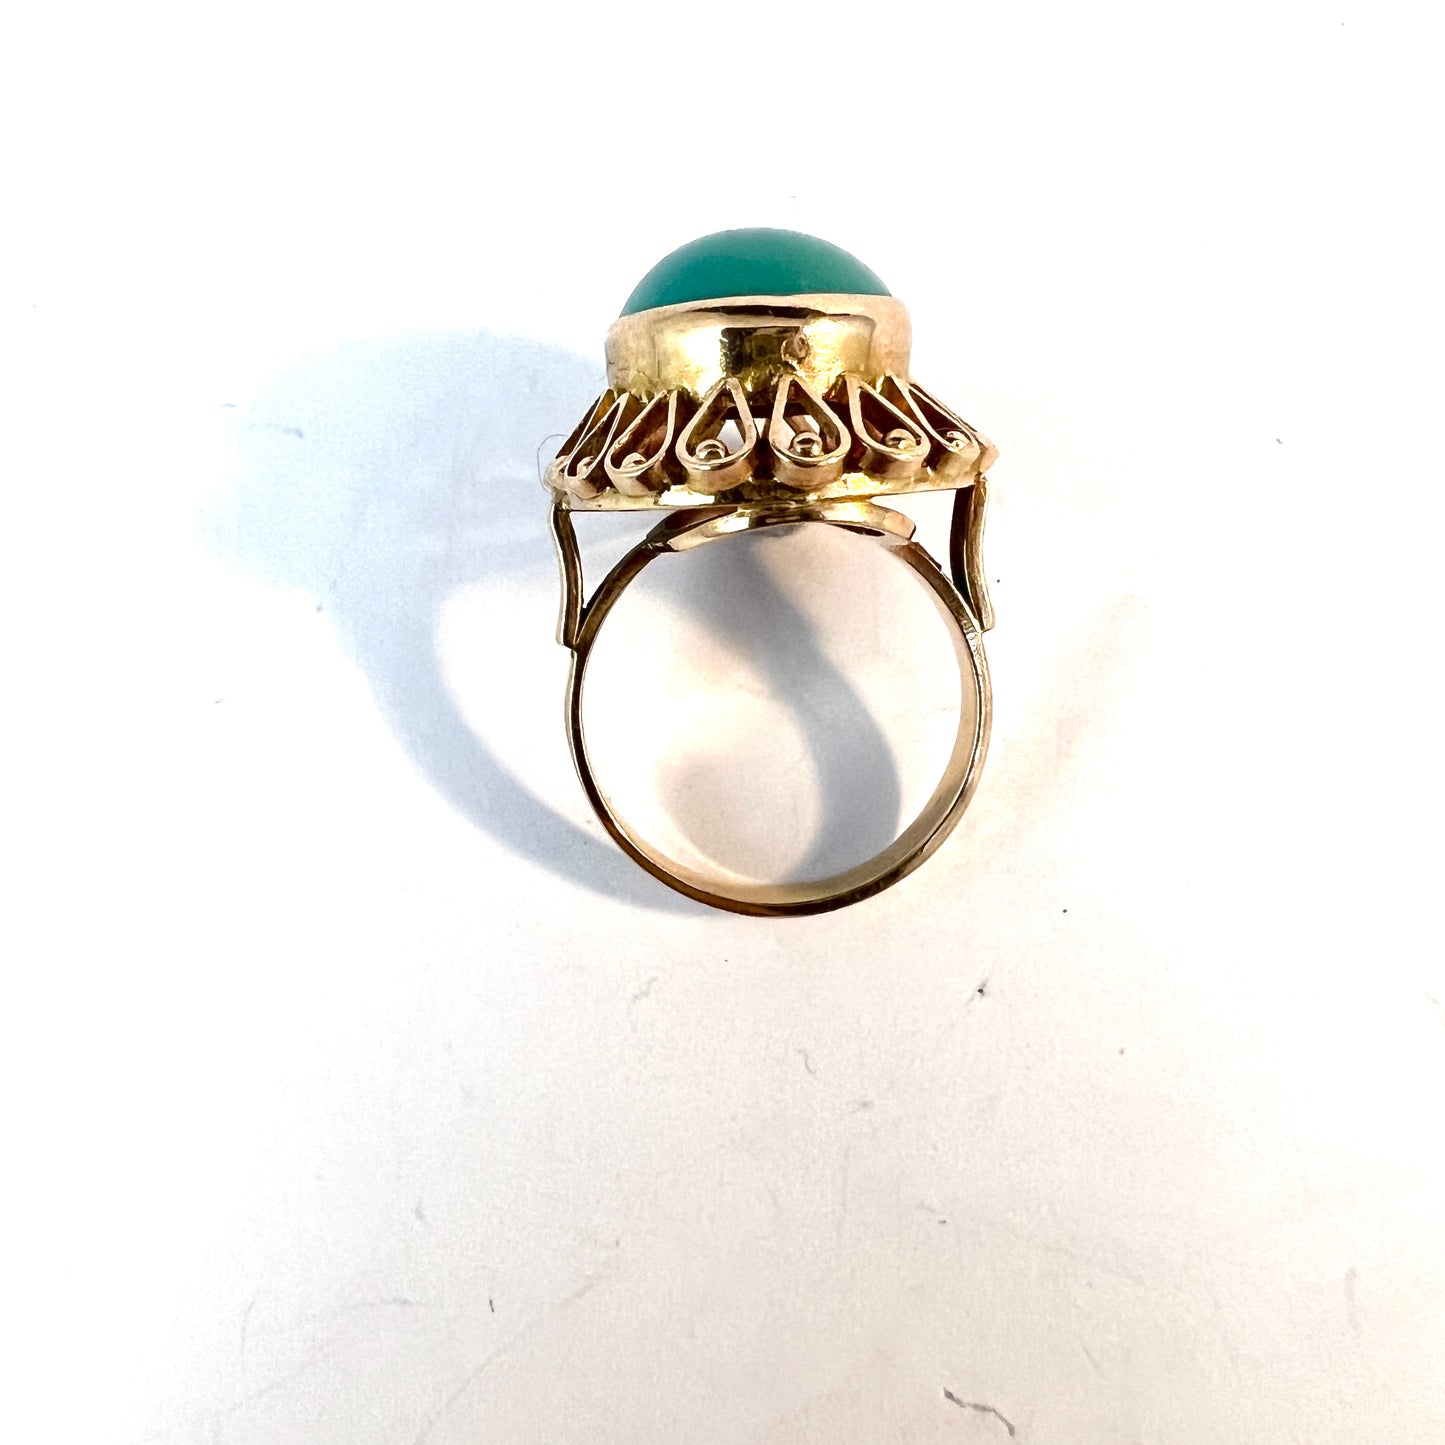 Warsaw Poland 1960s Bold 14k Gold Turquoise Ring.